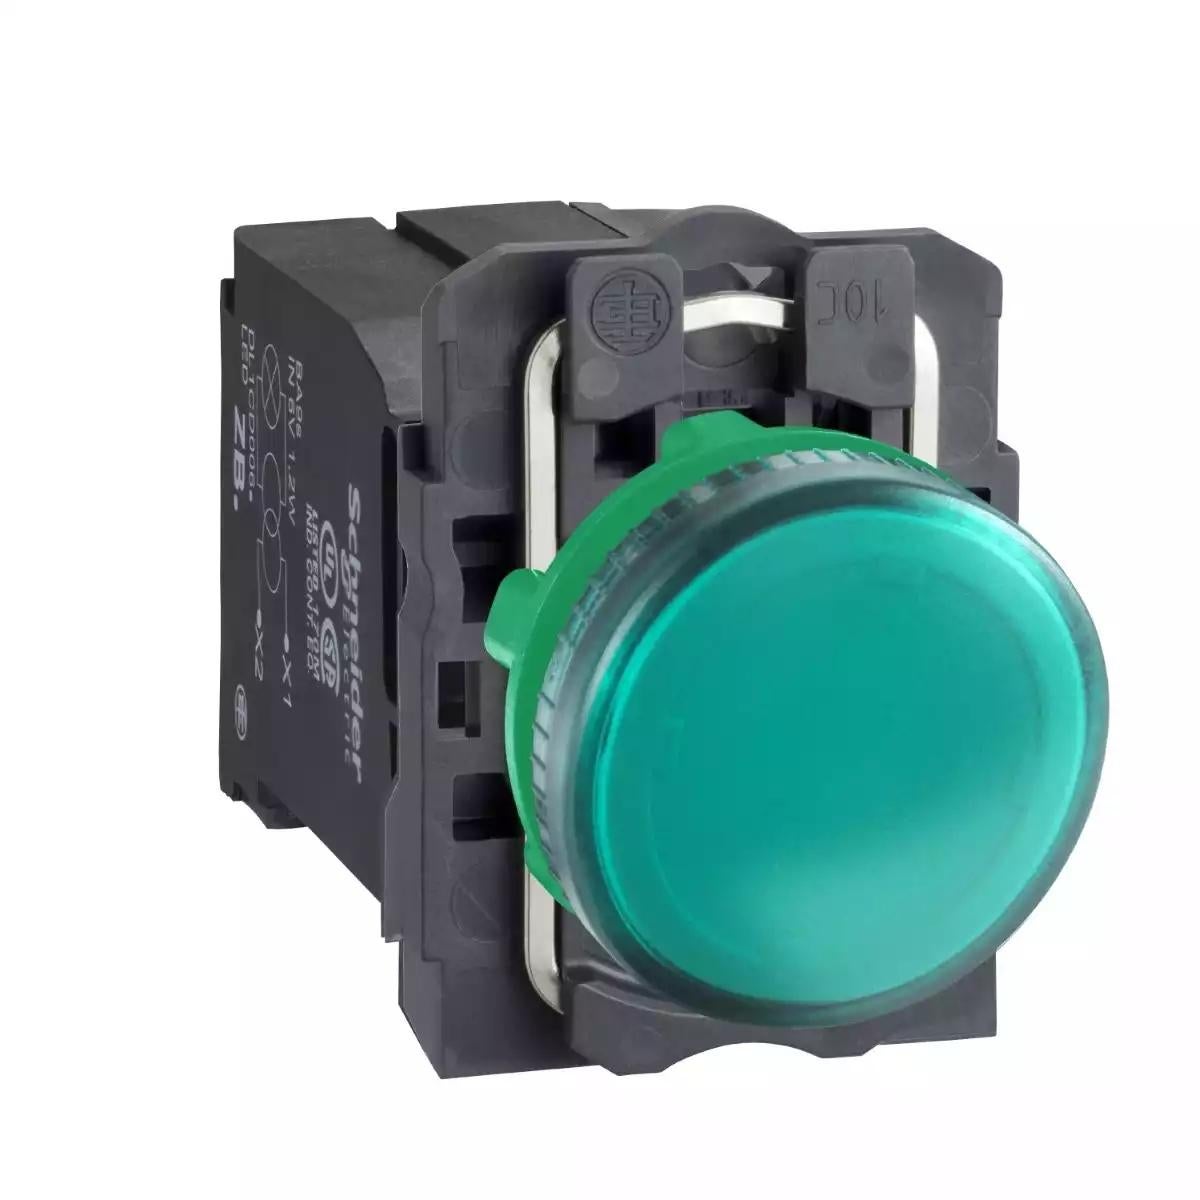 Pilot light, Harmony XB5, XB4, green complete Ø22 mm plain lens with BA9s bulb 110...120 V